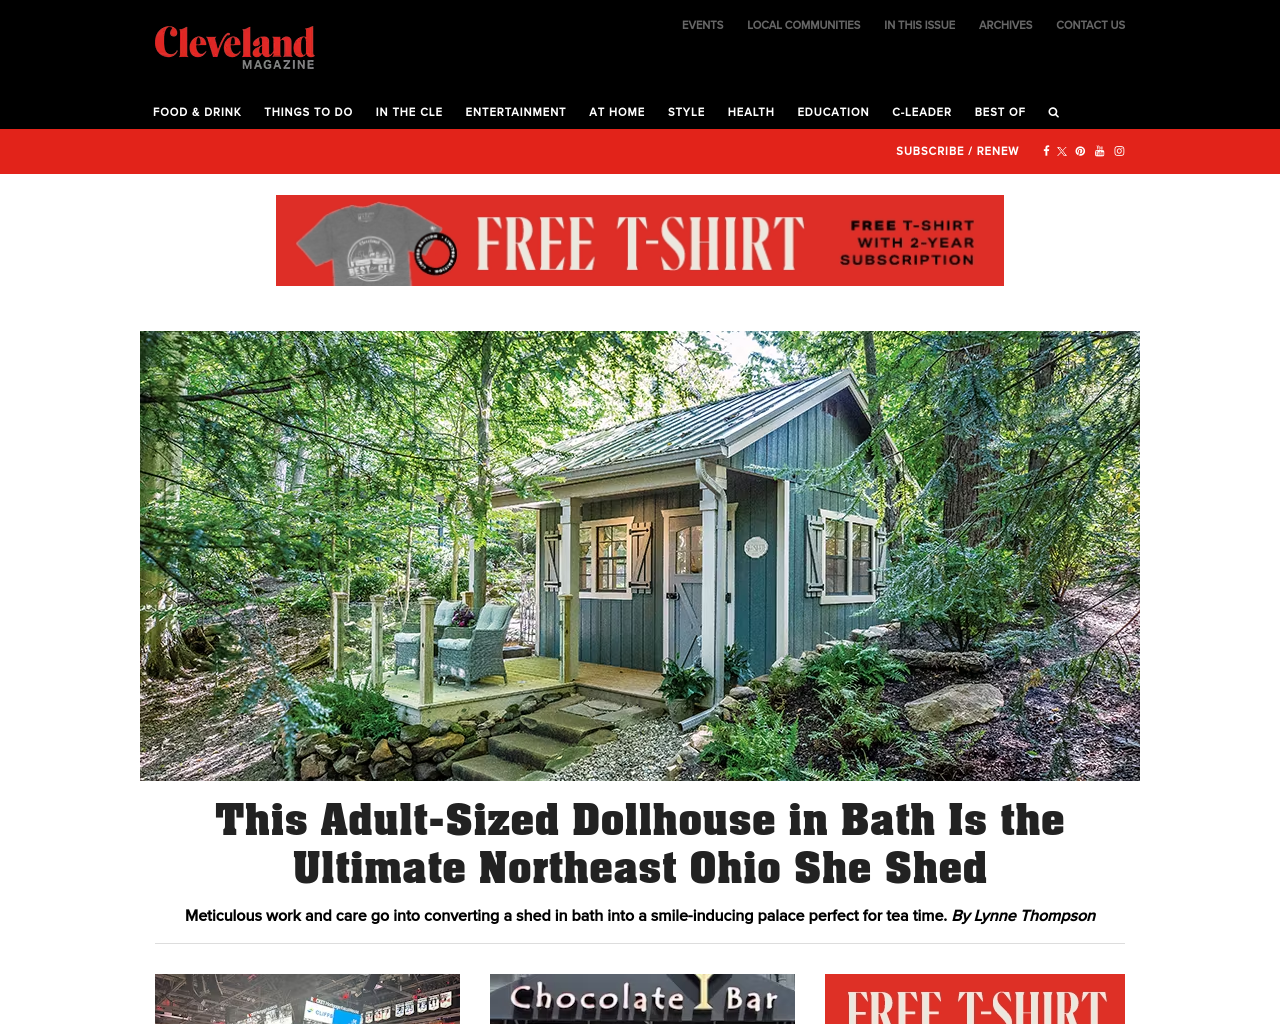 clevelandmagazine.com